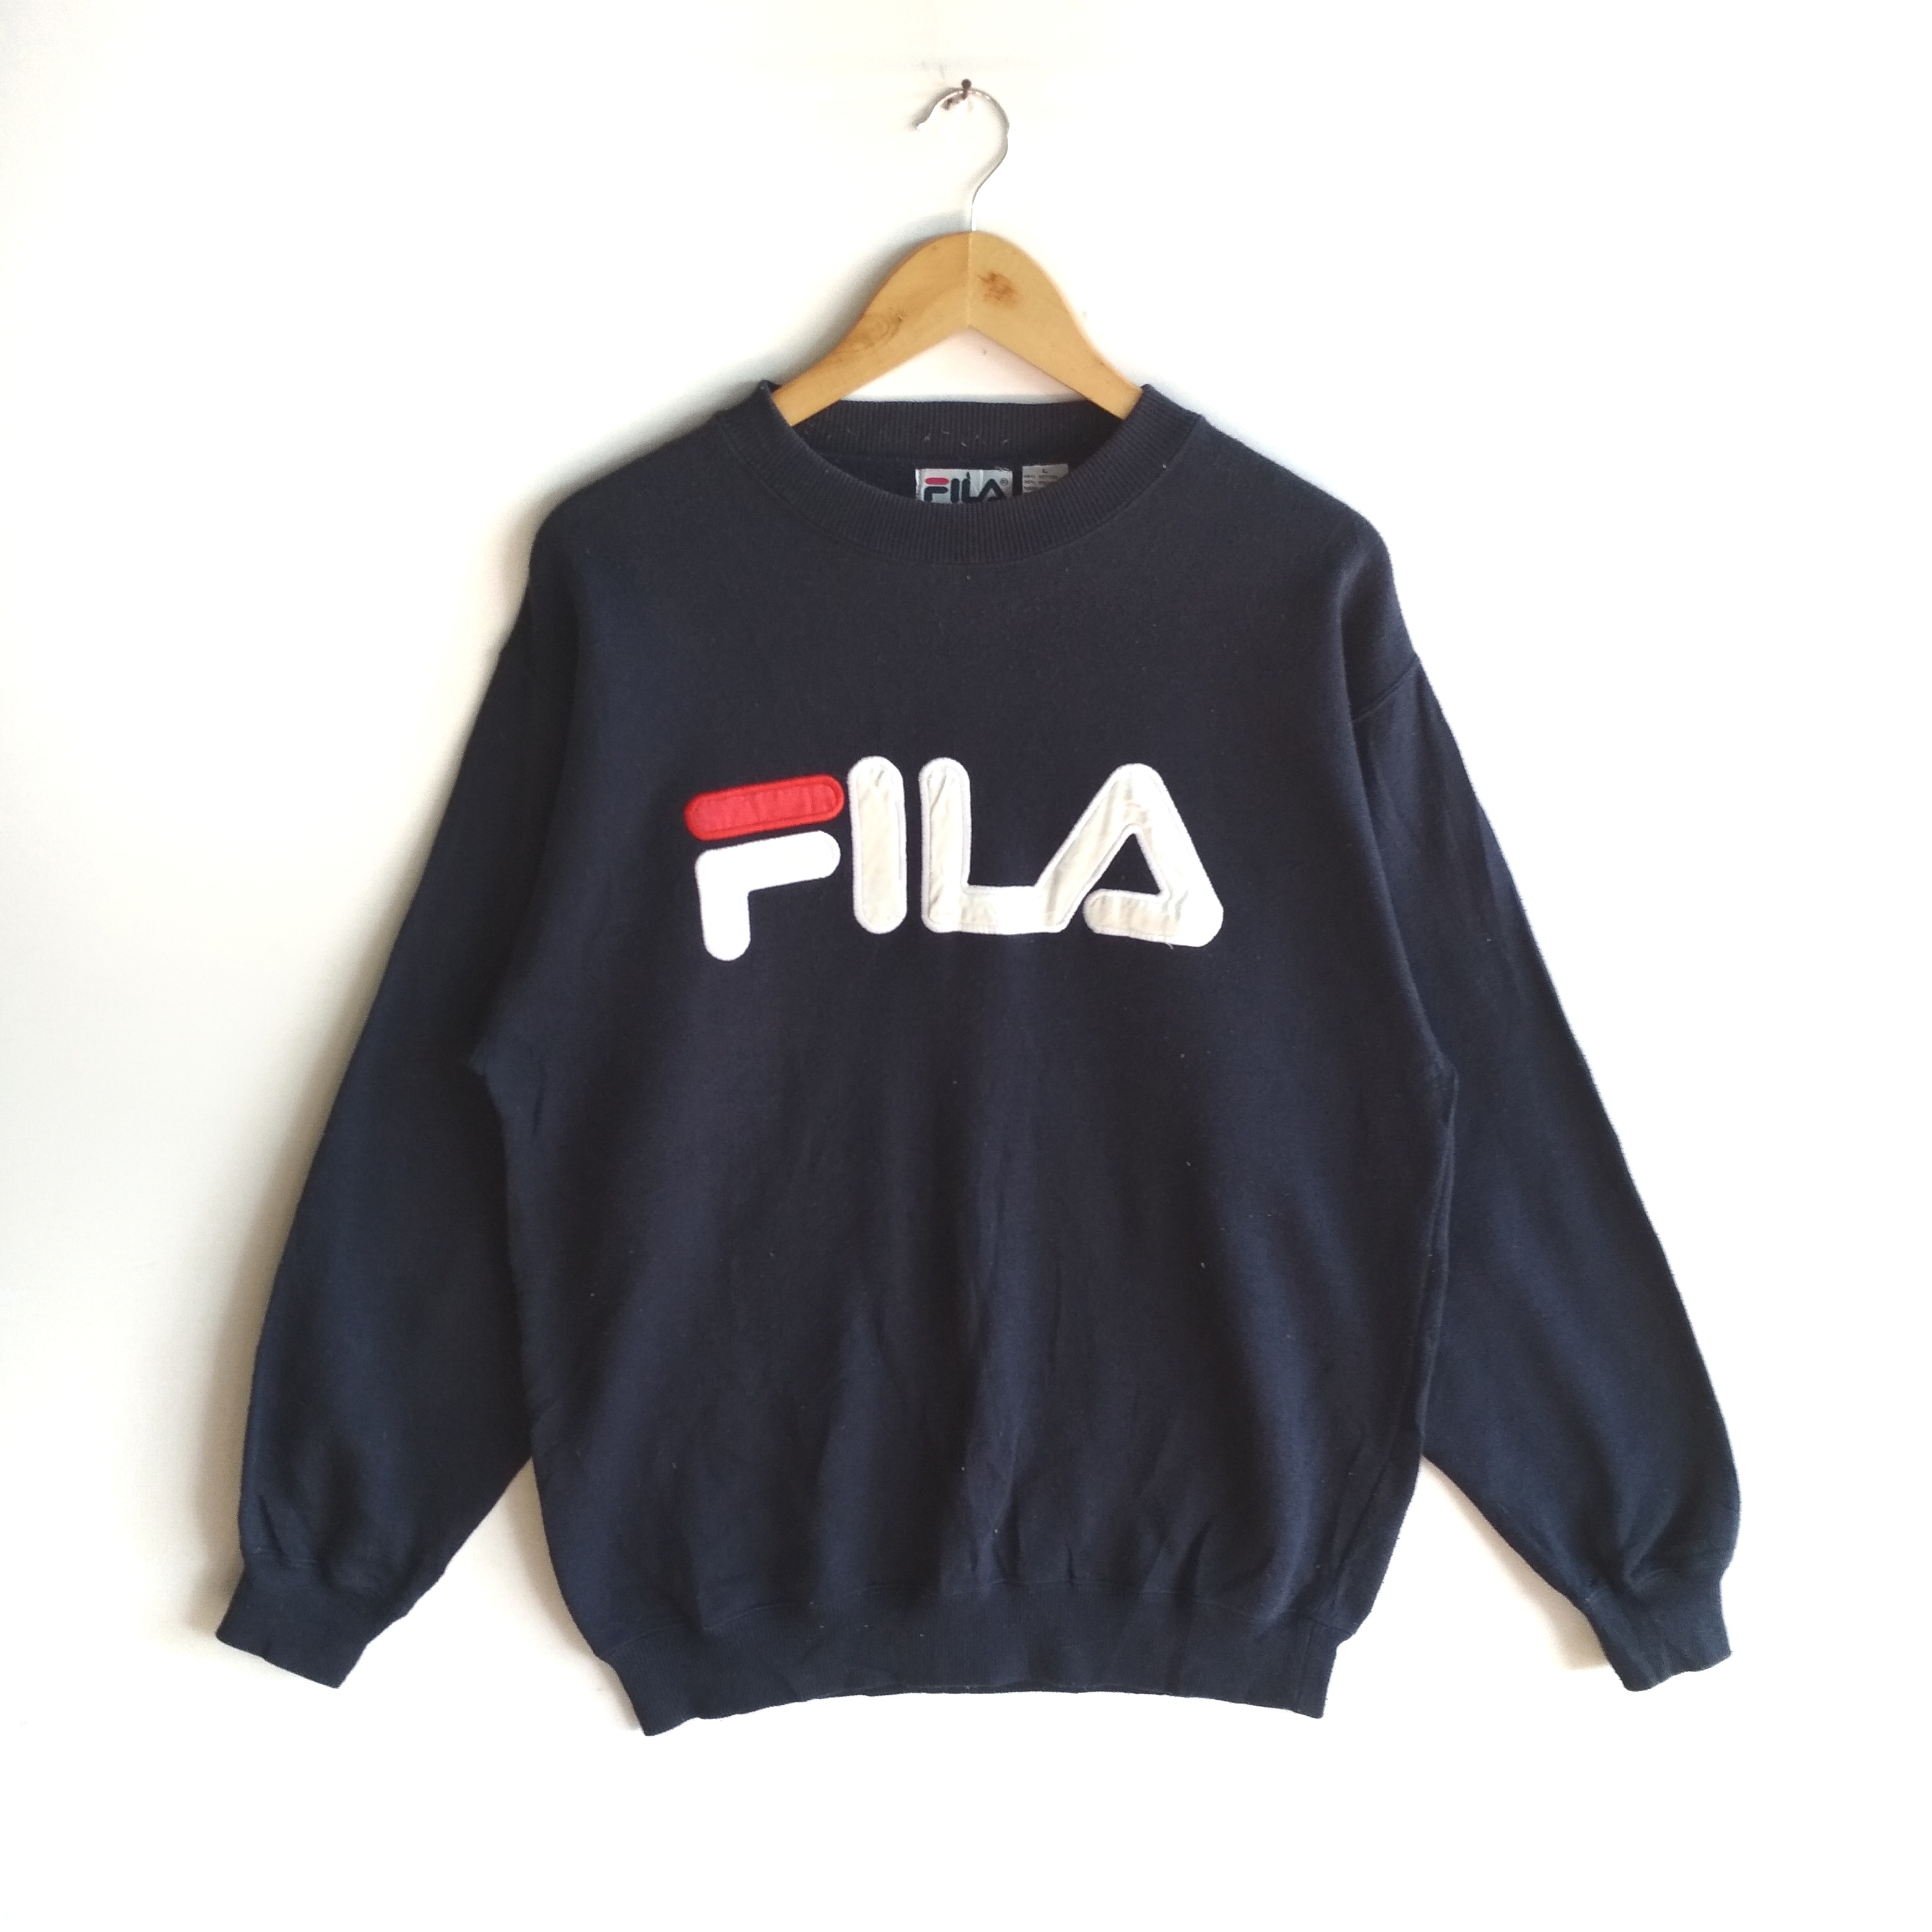 Fila - FILA Big Logo Embroidery Front and Back Sweatshirt - 1